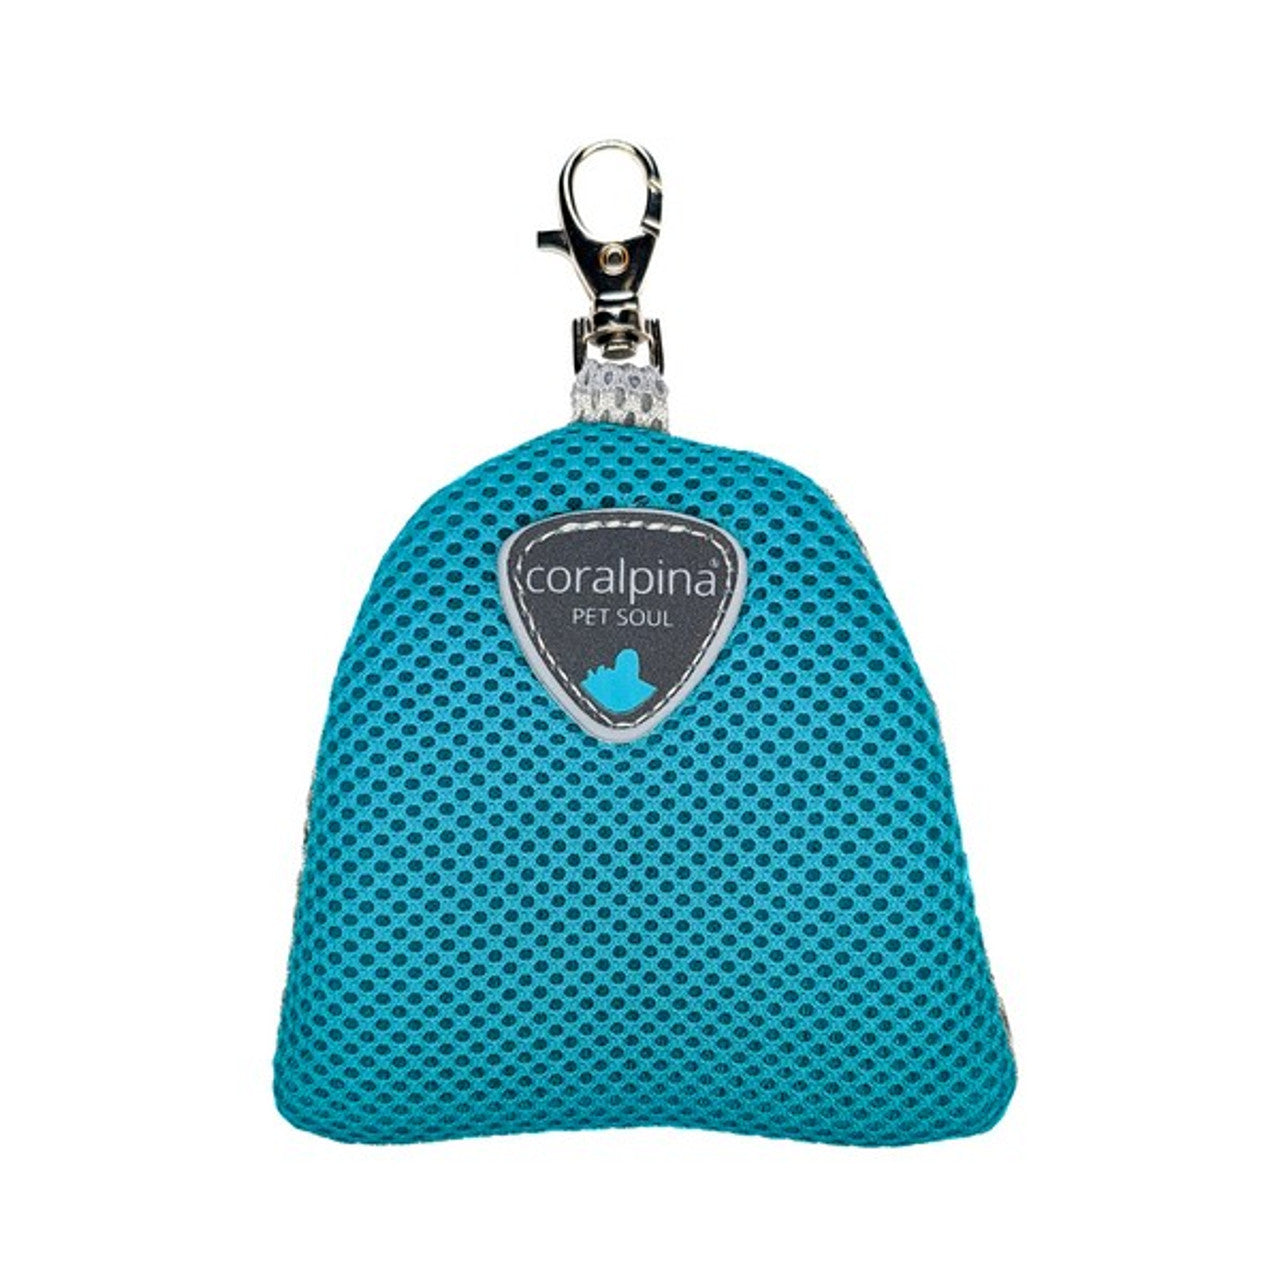 Coralpina Zainello Poop Bag Dispenser (Turquoise)